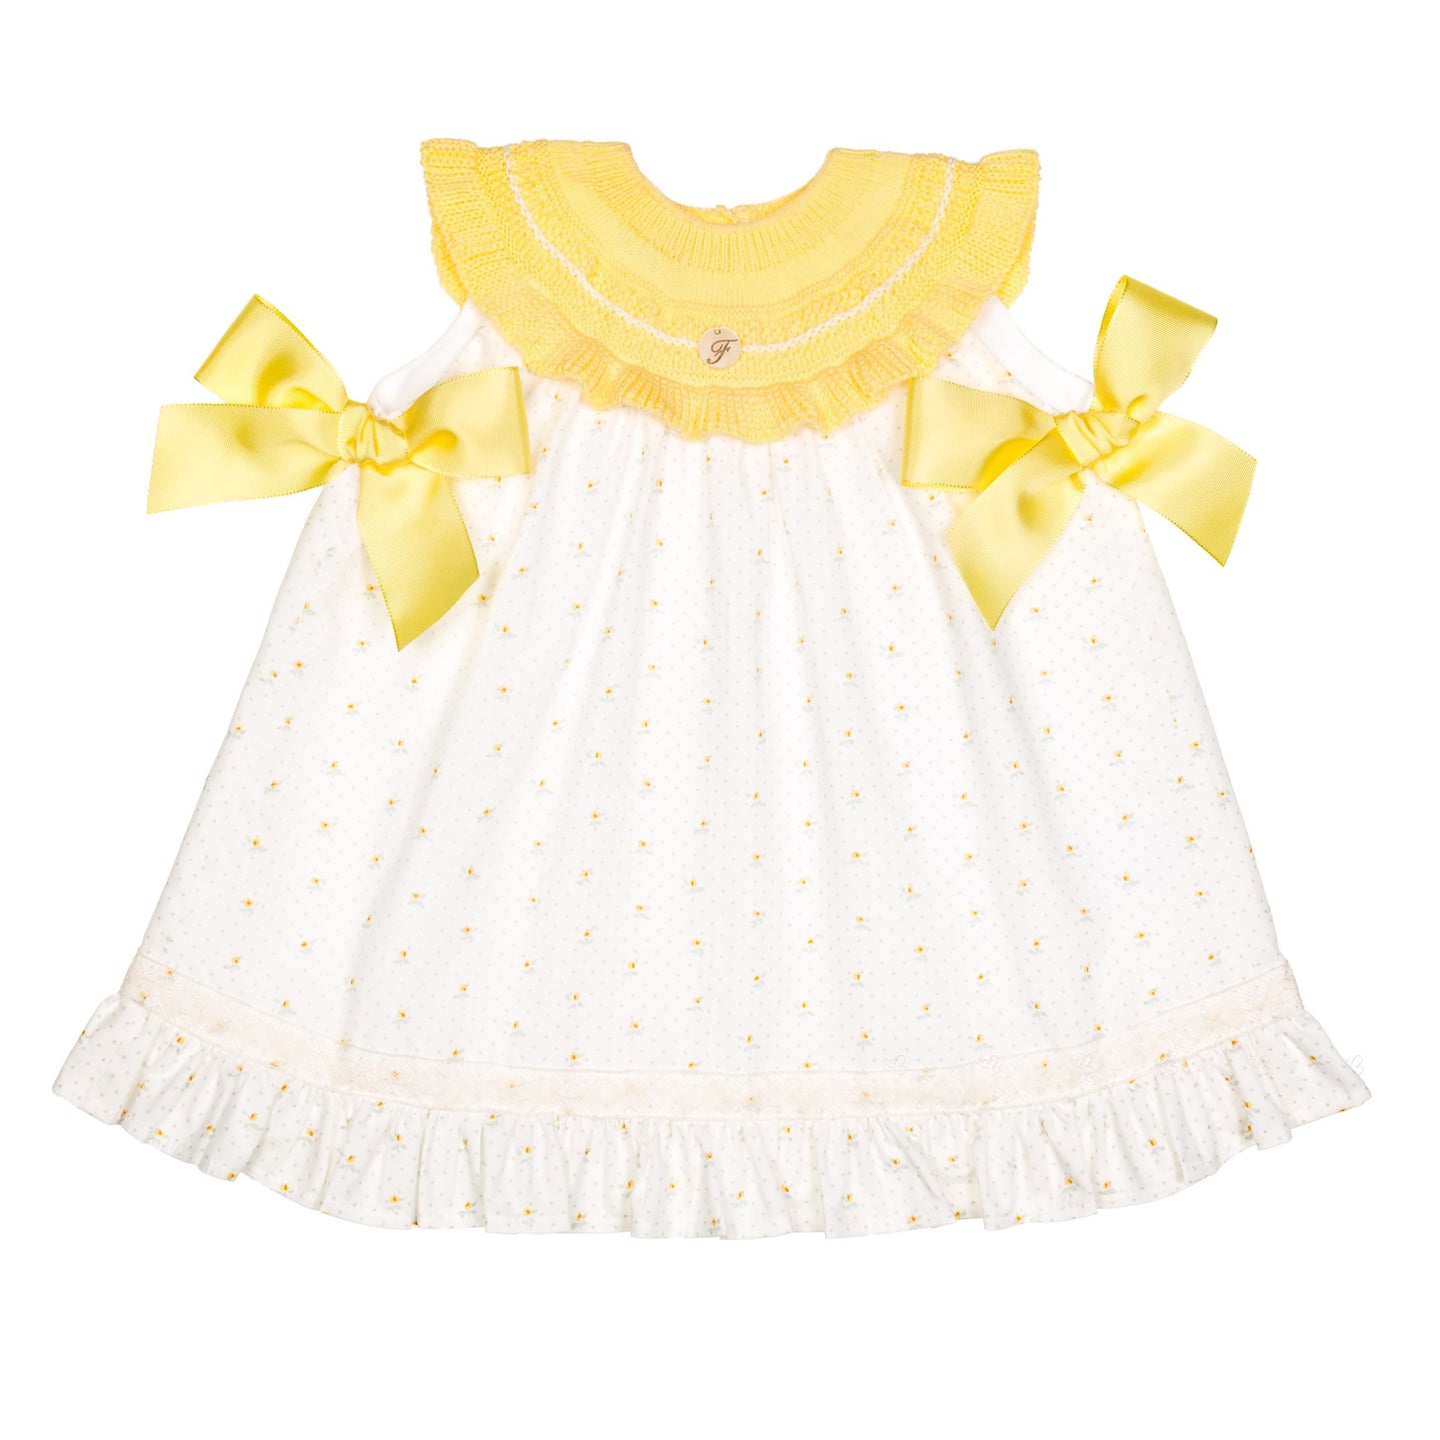 [6-12m] Foque Yellow Knit Top Dress w/ Knit Bonnet